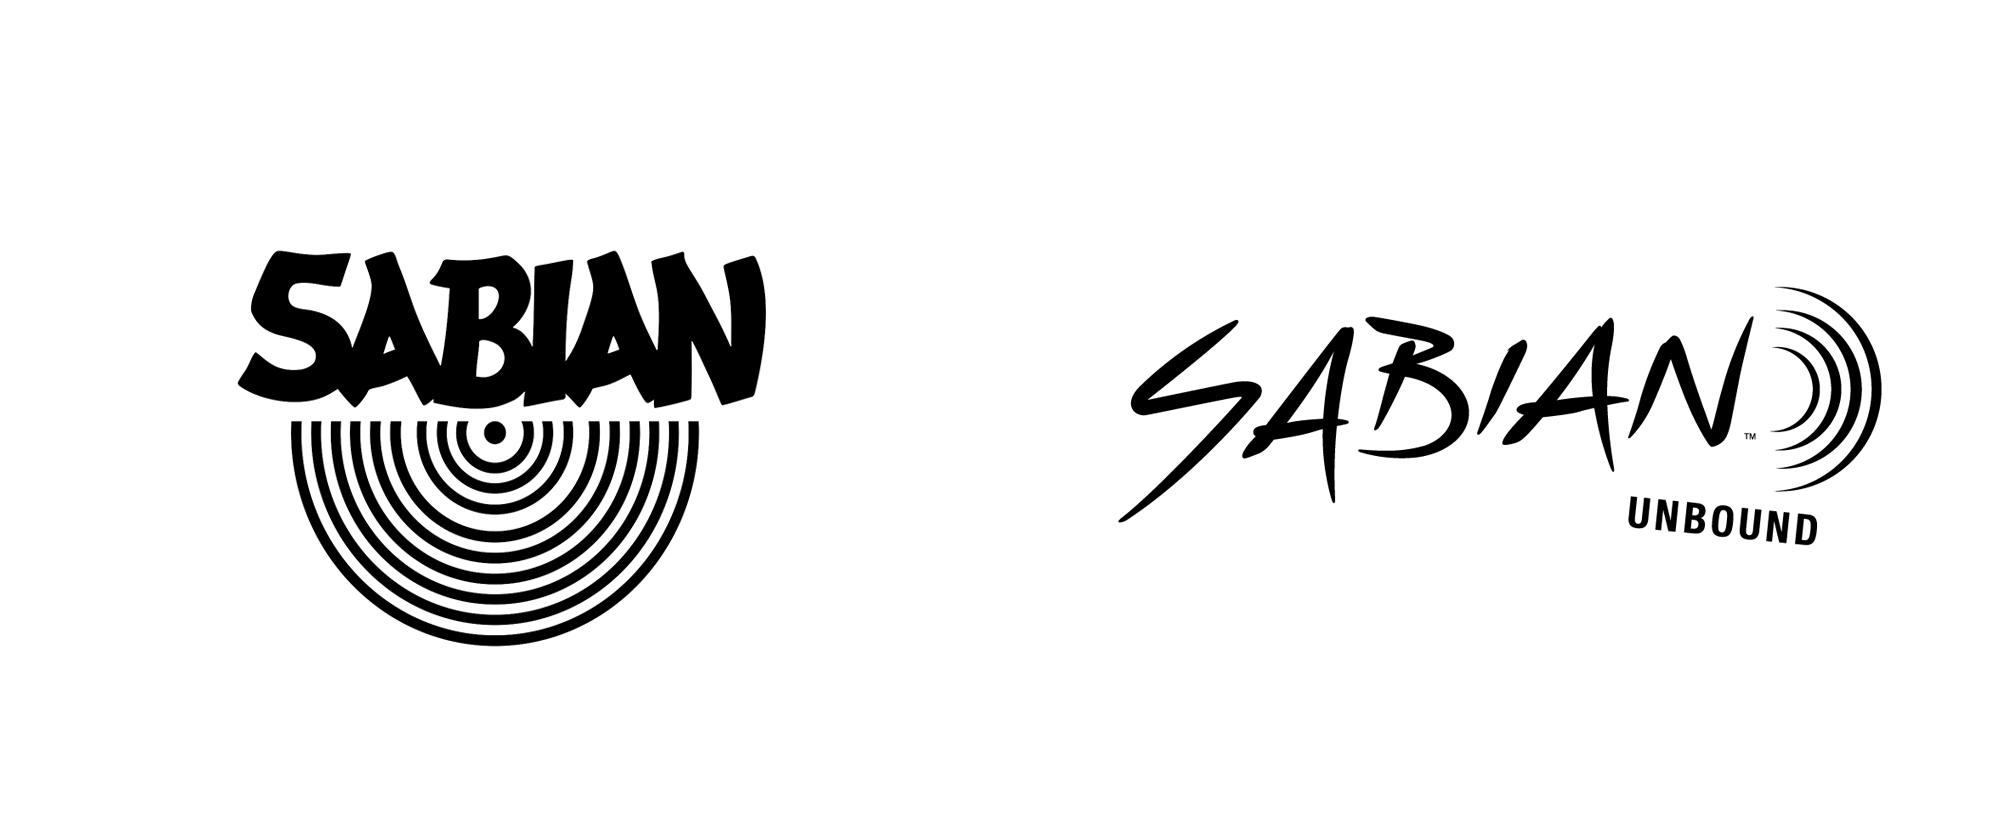 Sabian Logo - Brand New: New Logo for SABIAN